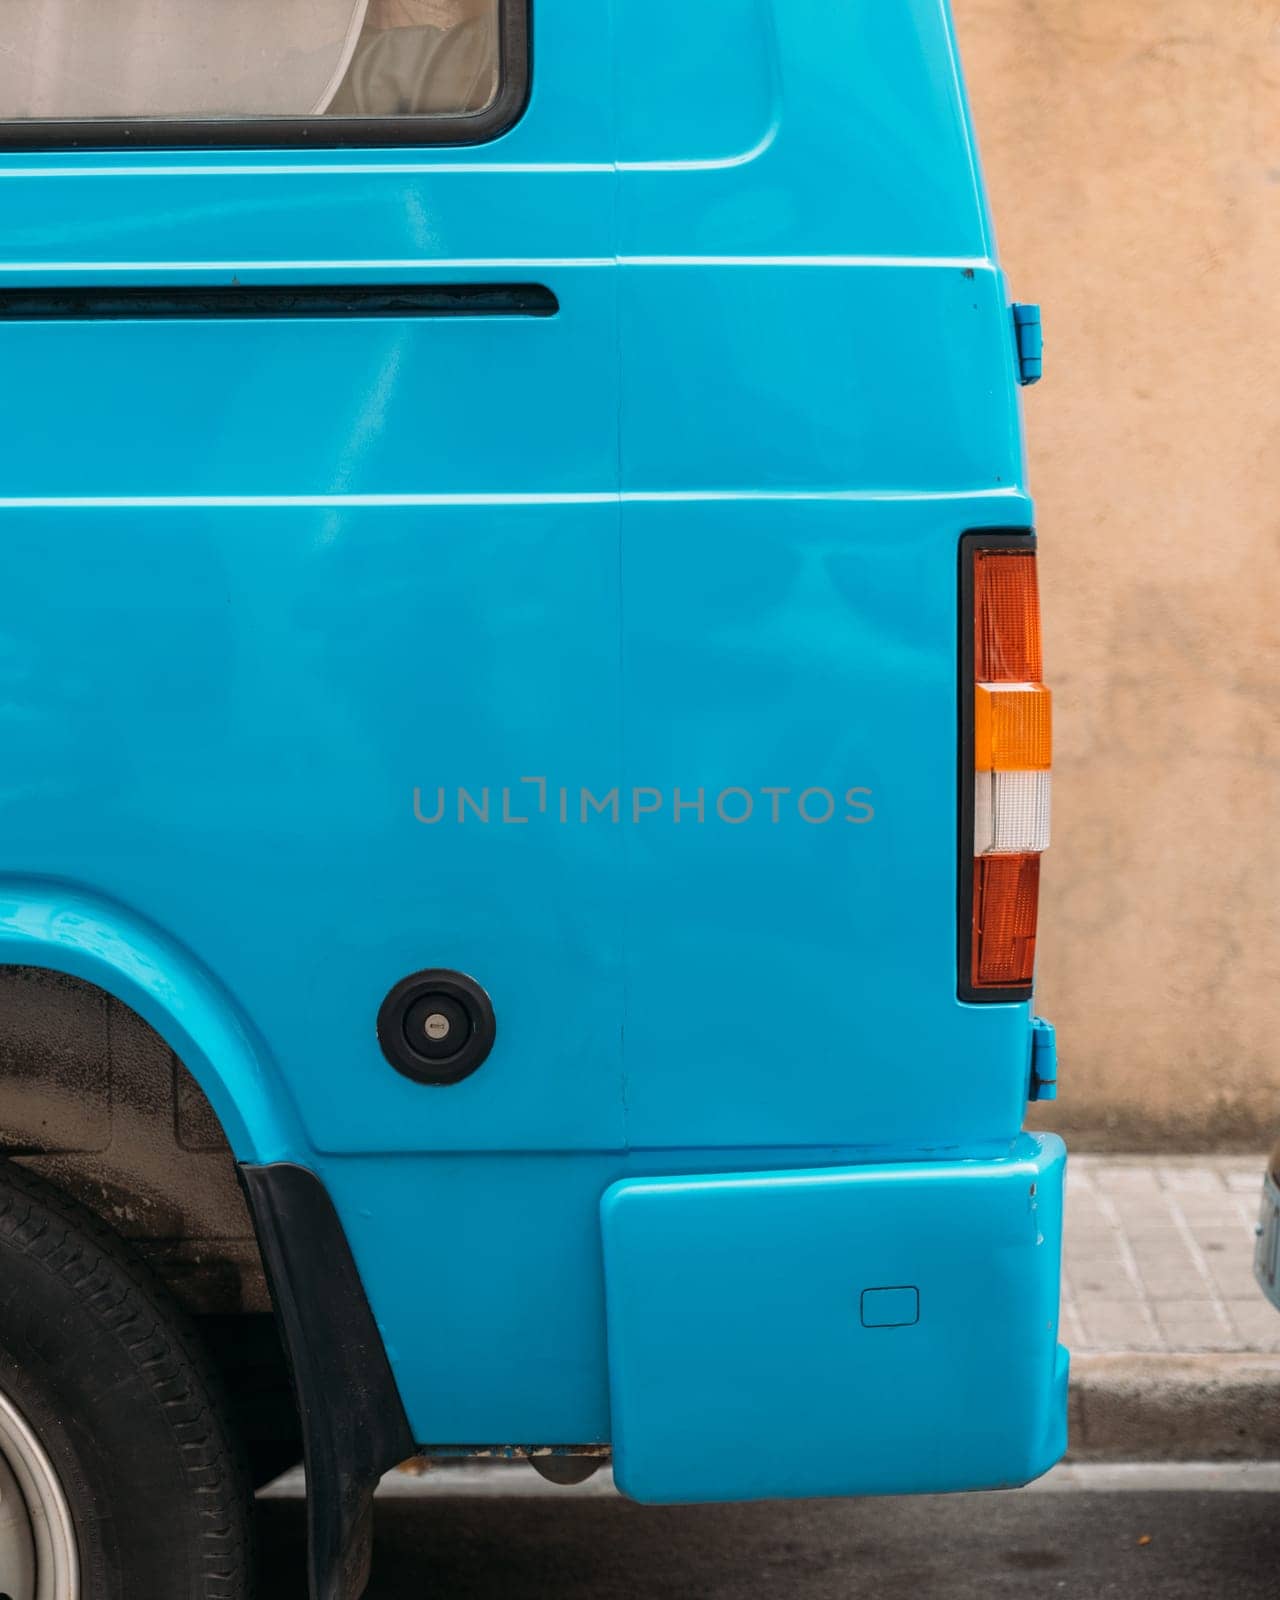 Vibrant Blue Vintage Van Parked on an Urban Street by apavlin